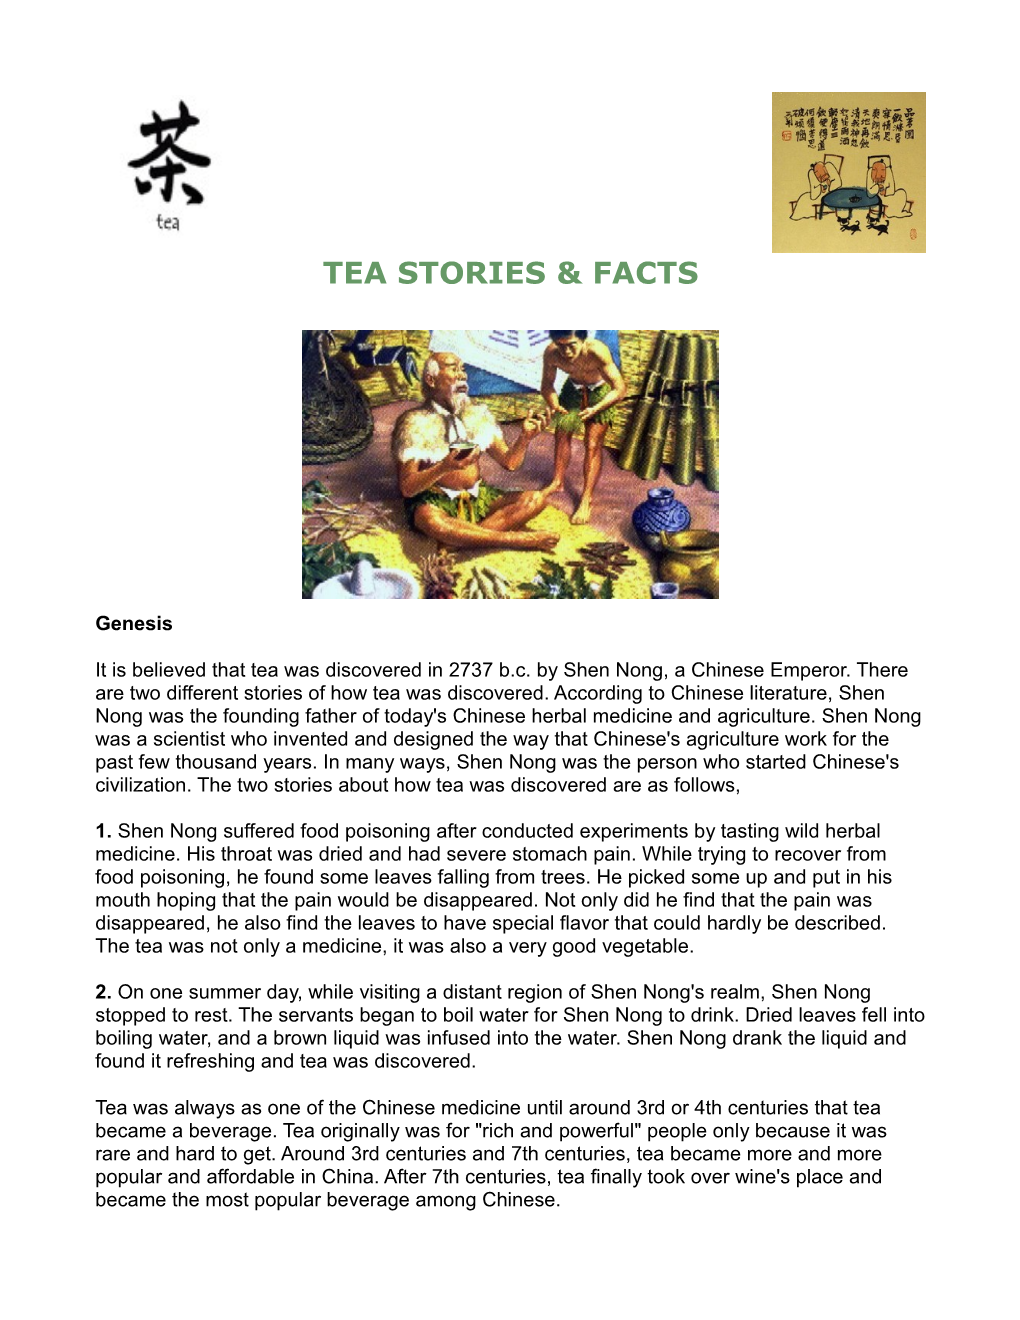 Tea Stories & Facts